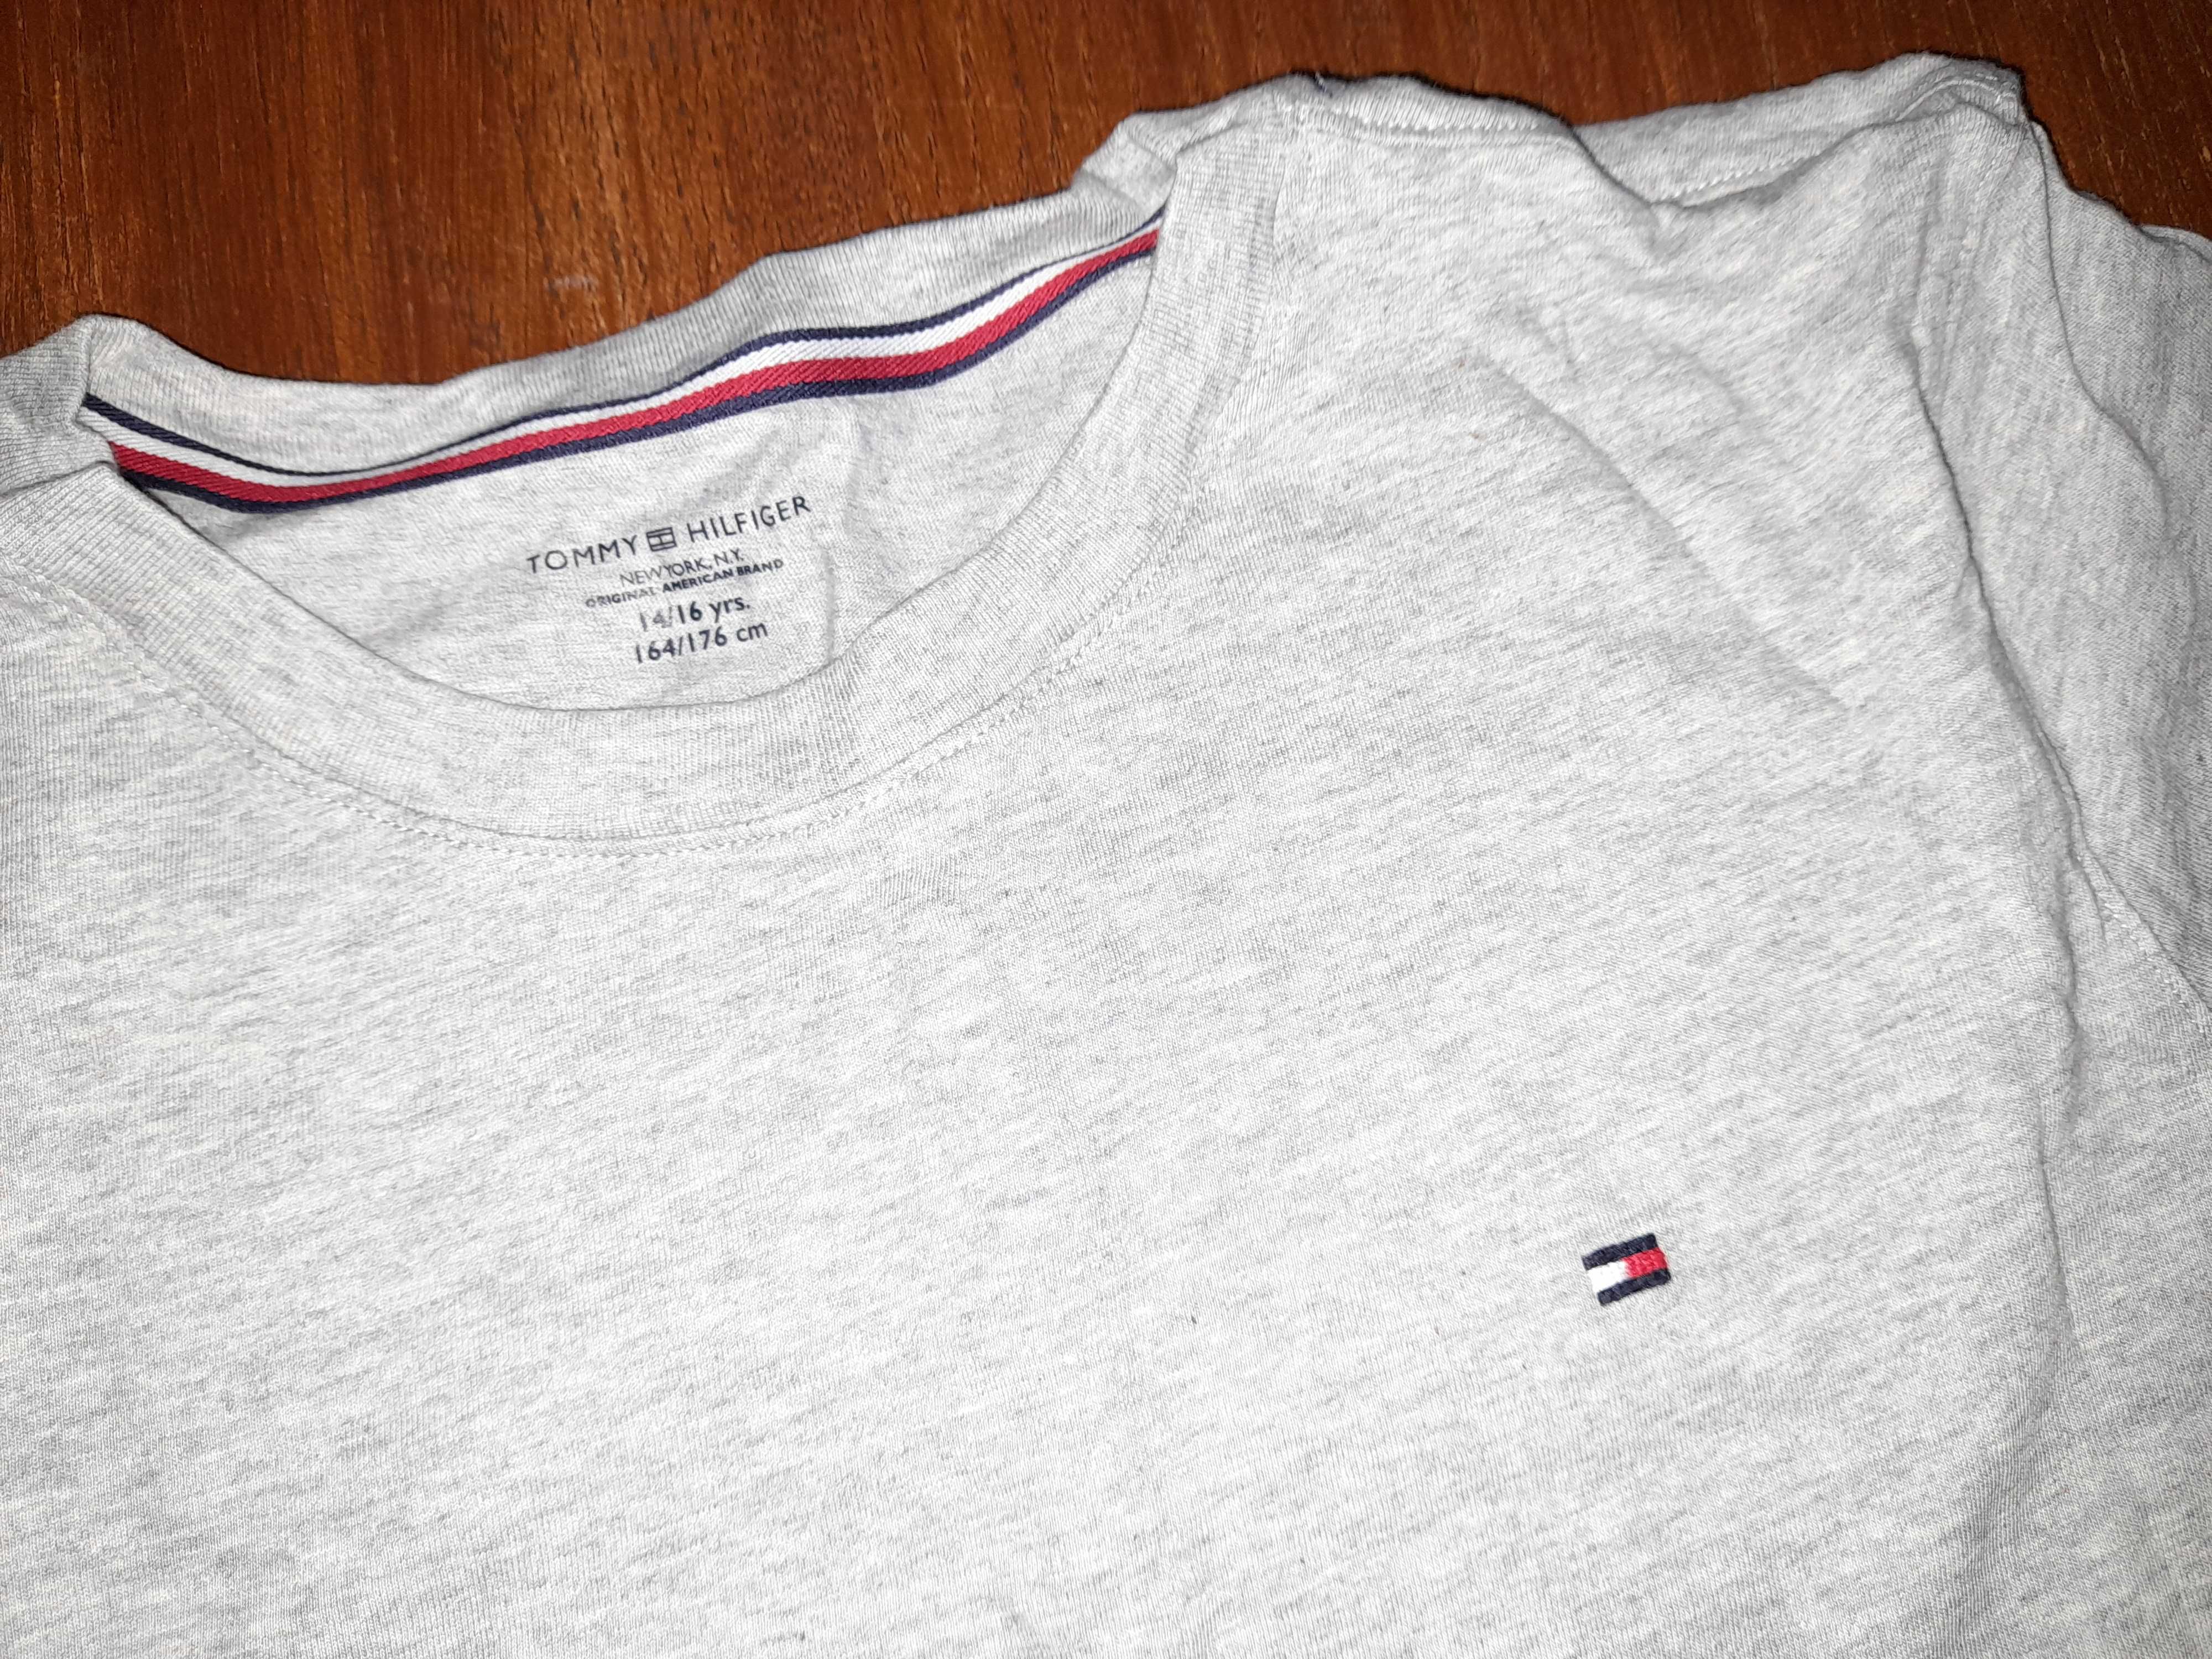 Tommy Hilfiger bluzka t-shirt S 36  nowy